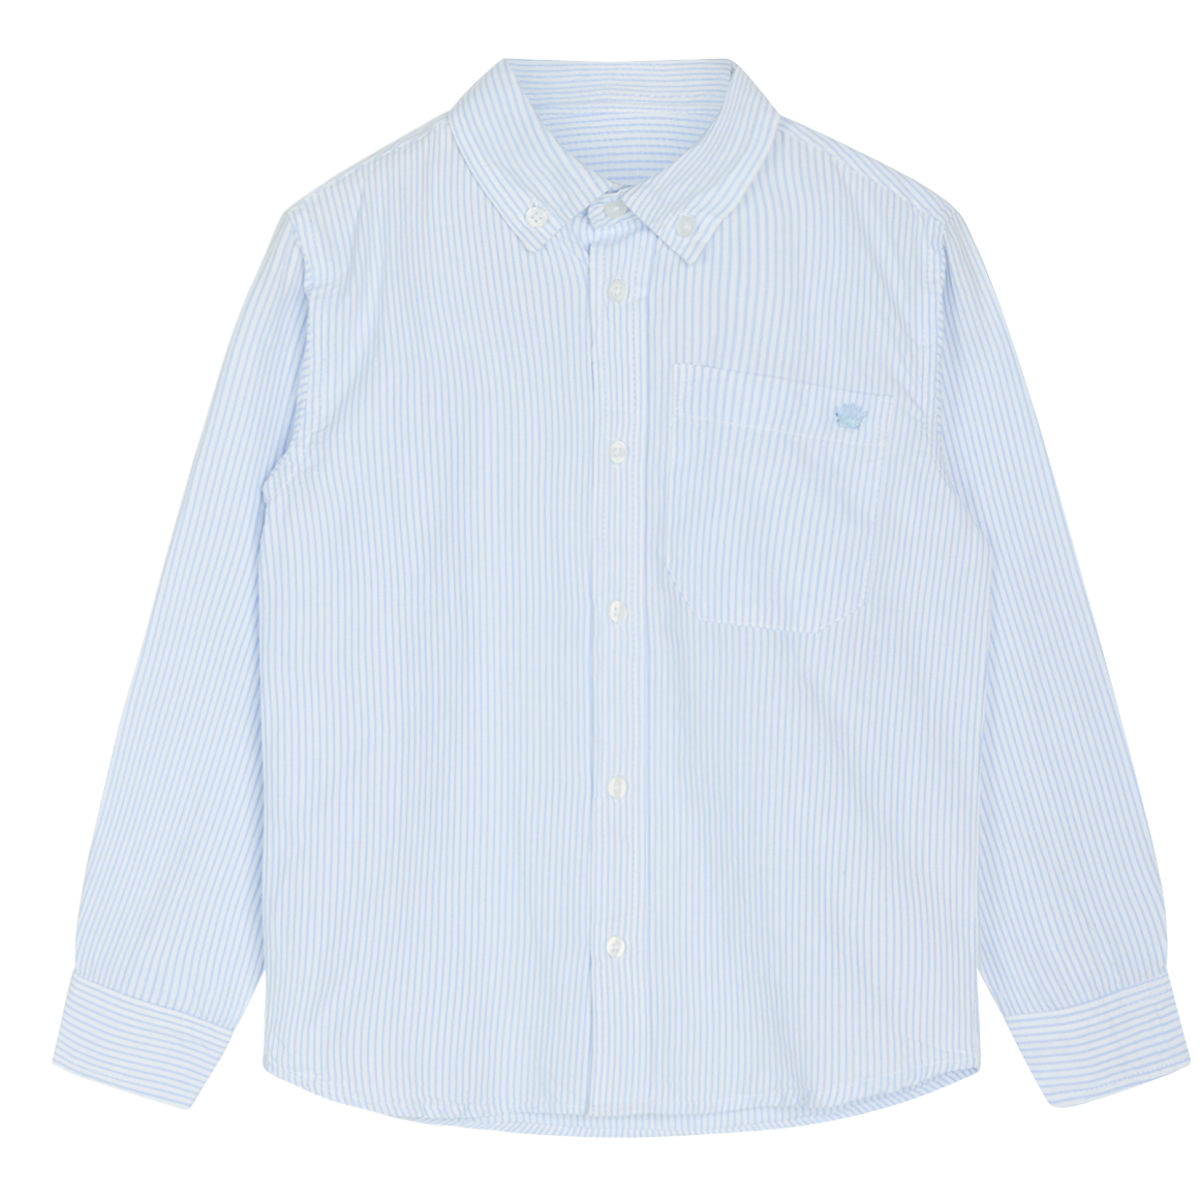 Hust and claire skjorte - ruben-hvid med blå striber